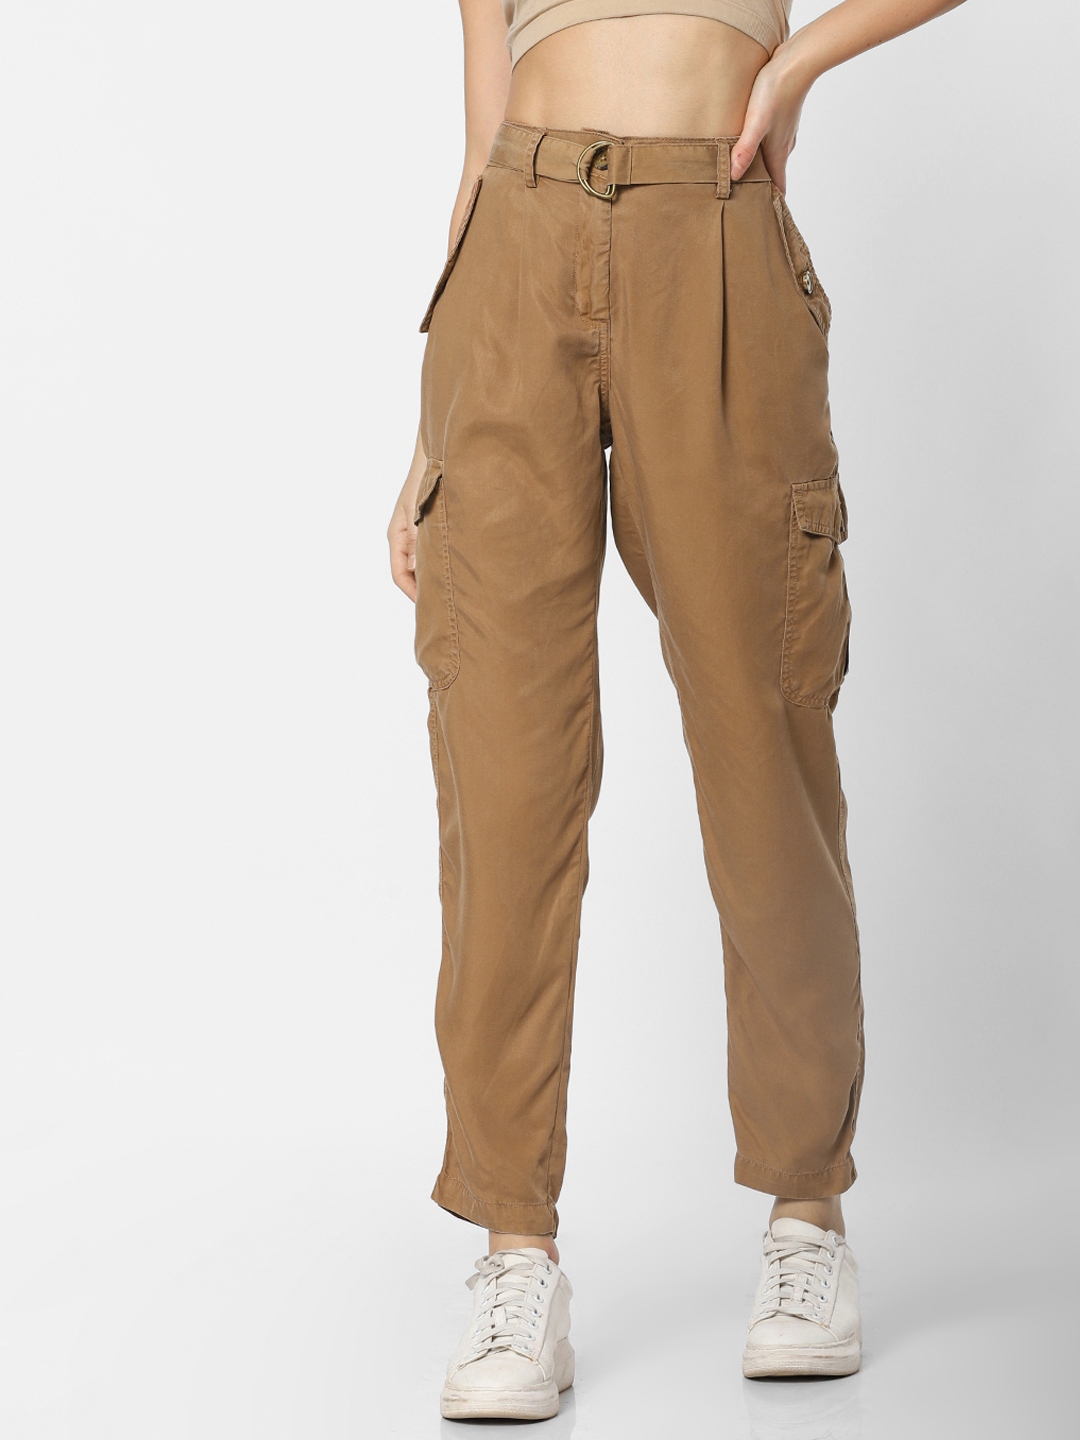 petite khaki cargo pants